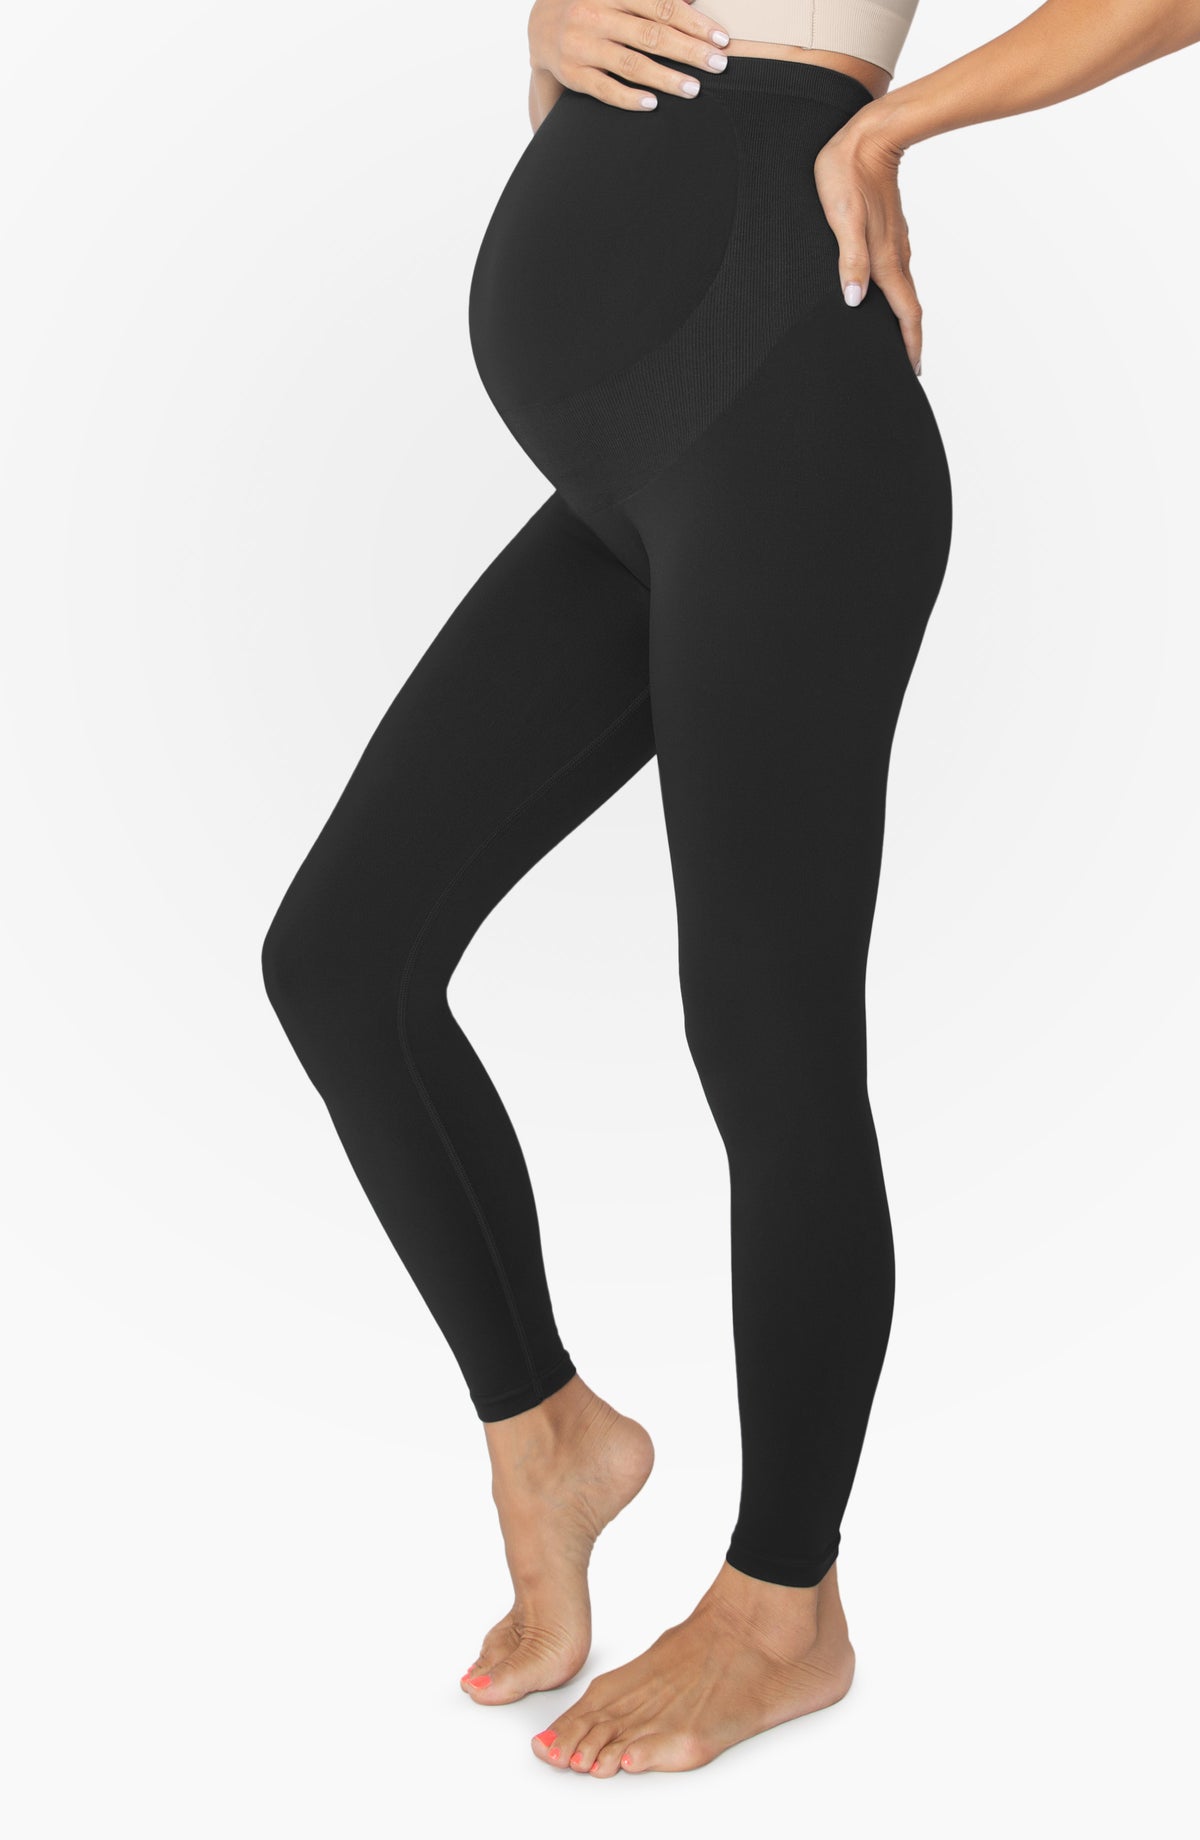 Women's Ultra-Soft Stretchy Maternity Legging Shorts Black